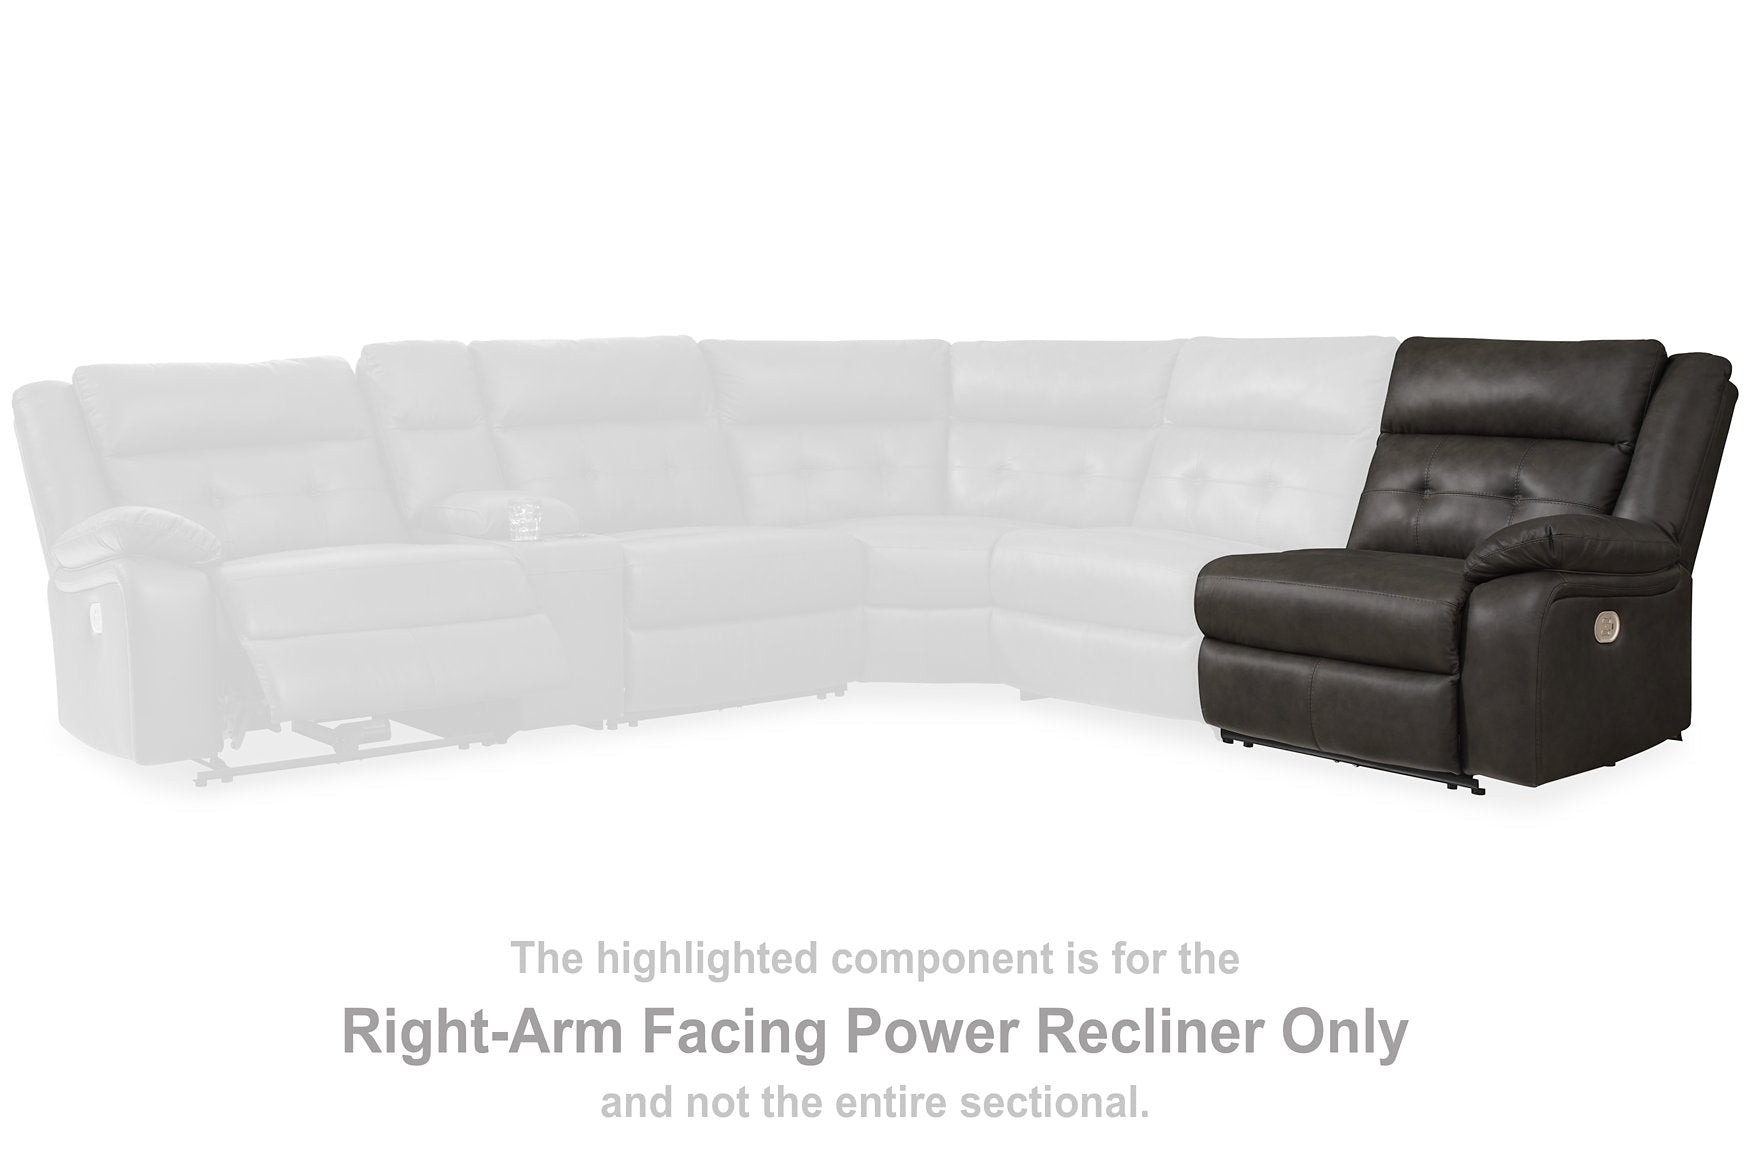 Mackie Pike 3-Piece Power Reclining Sectional Sofa - Half Price Furniture